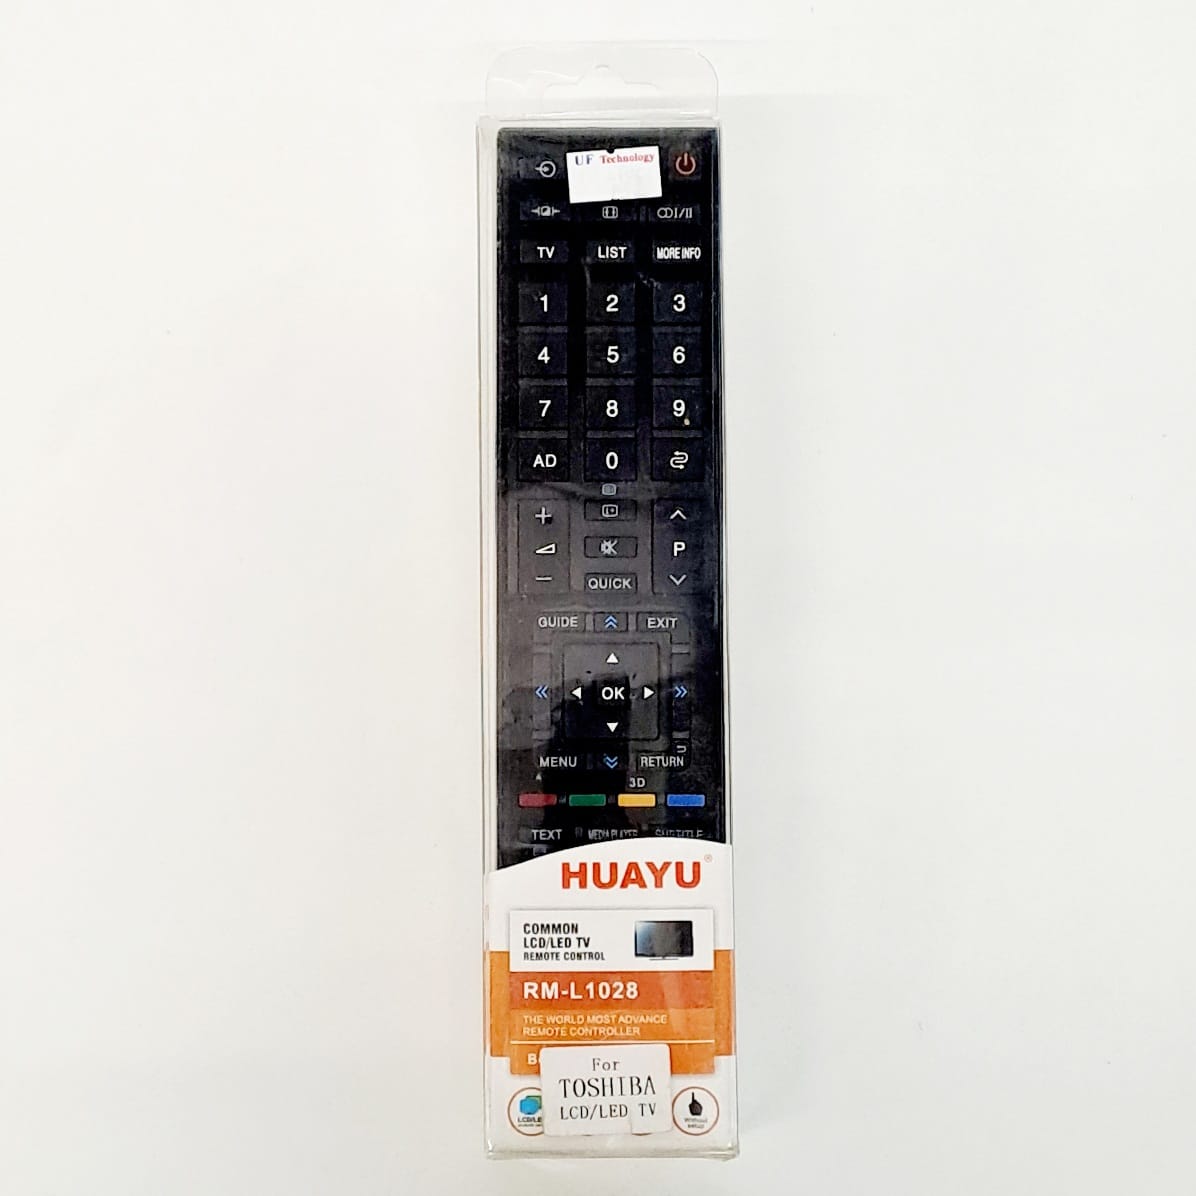 HUAYU Remote Control for Toshiba LCD/LED TV 